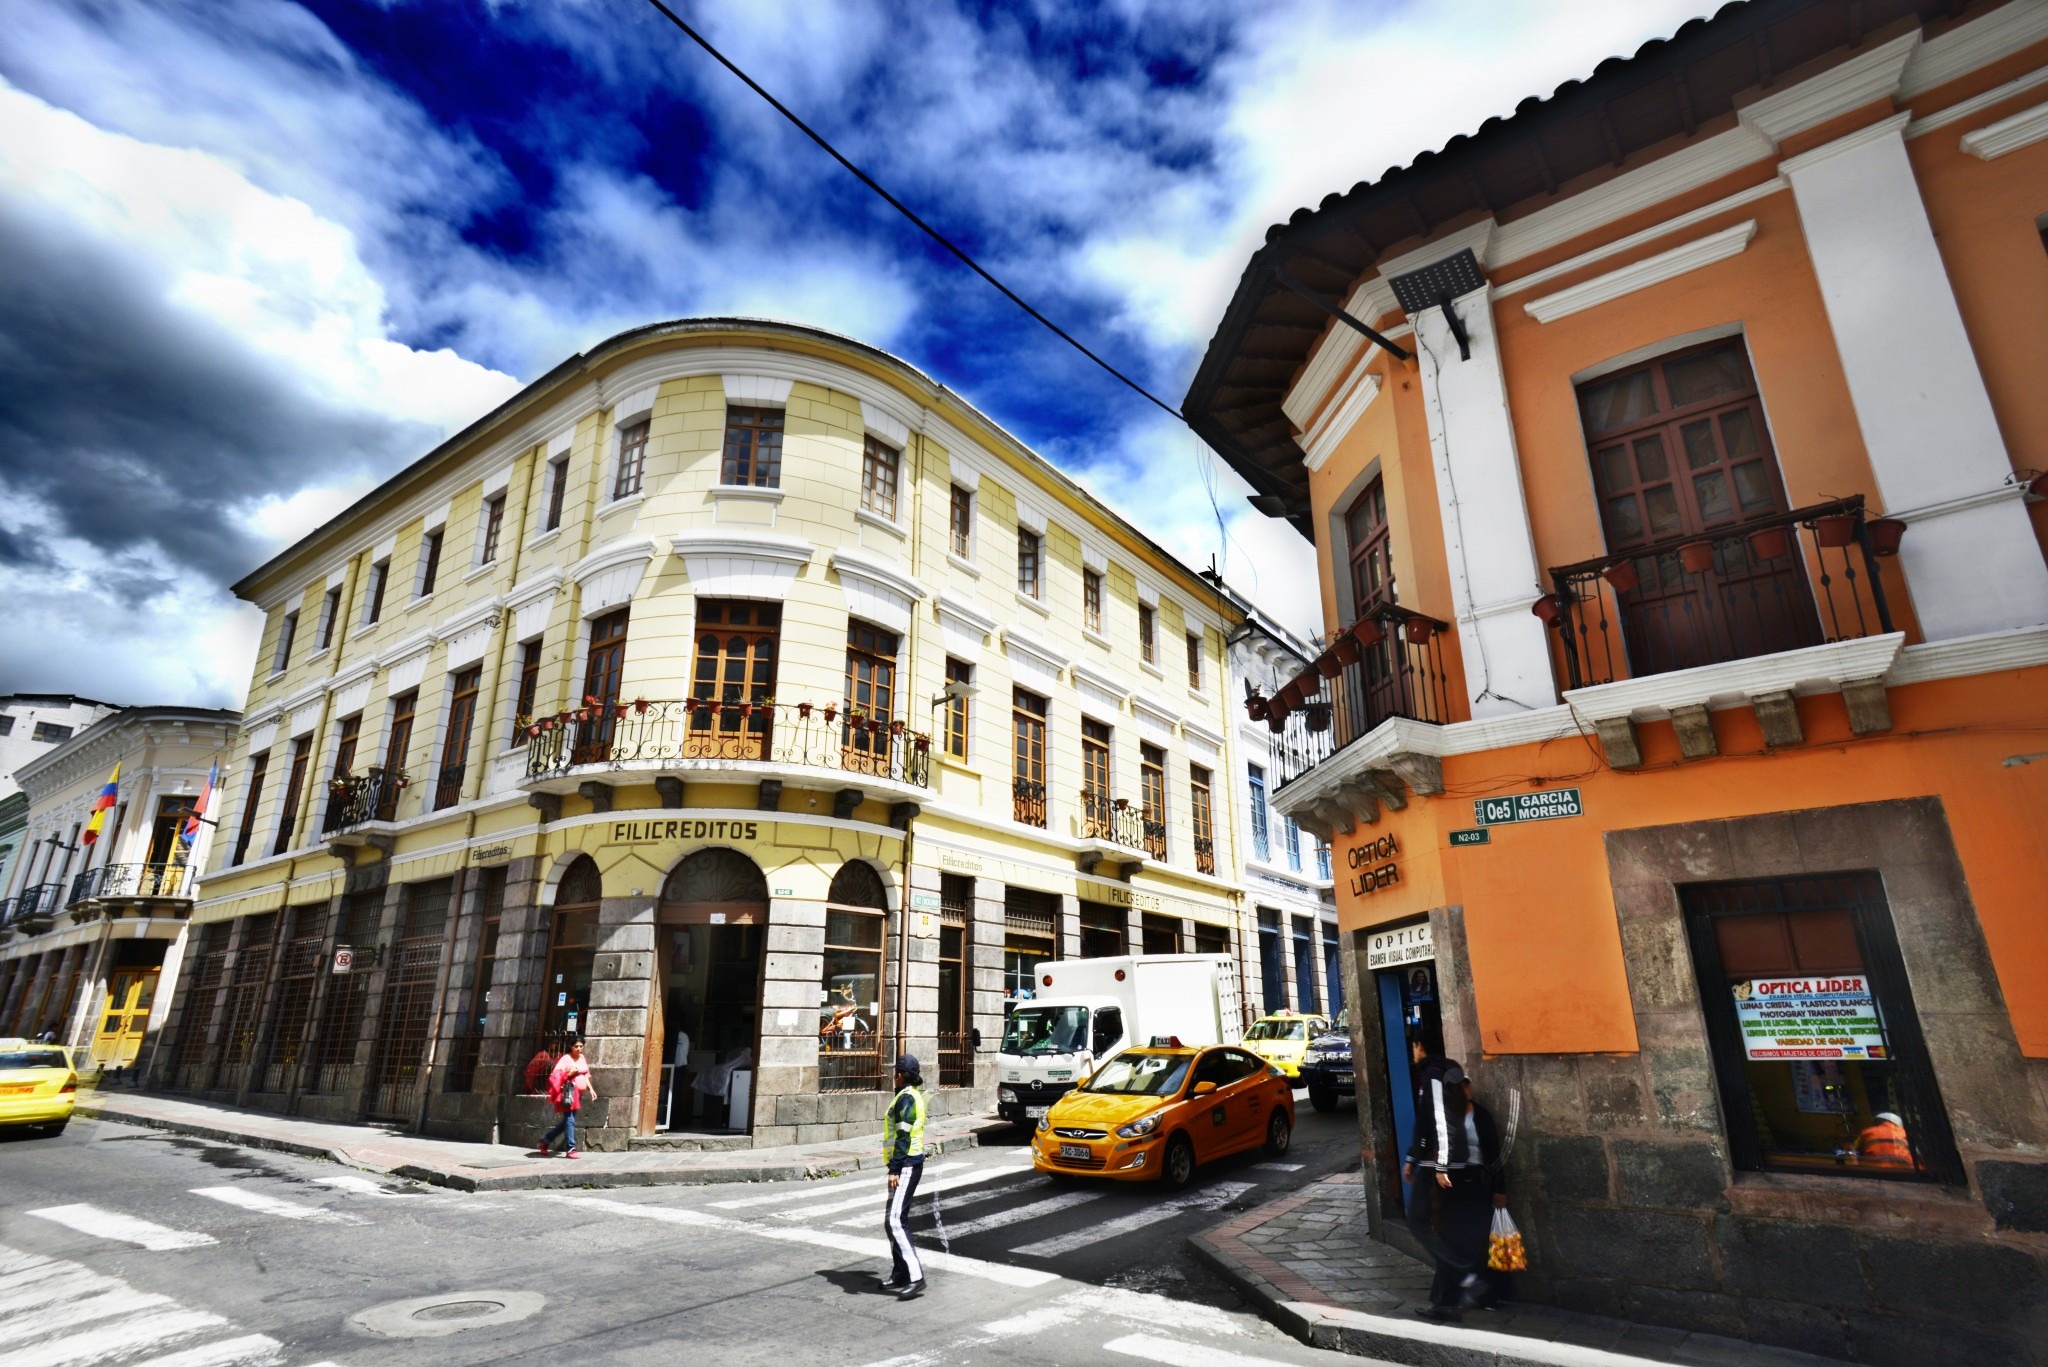 street scene in Quito